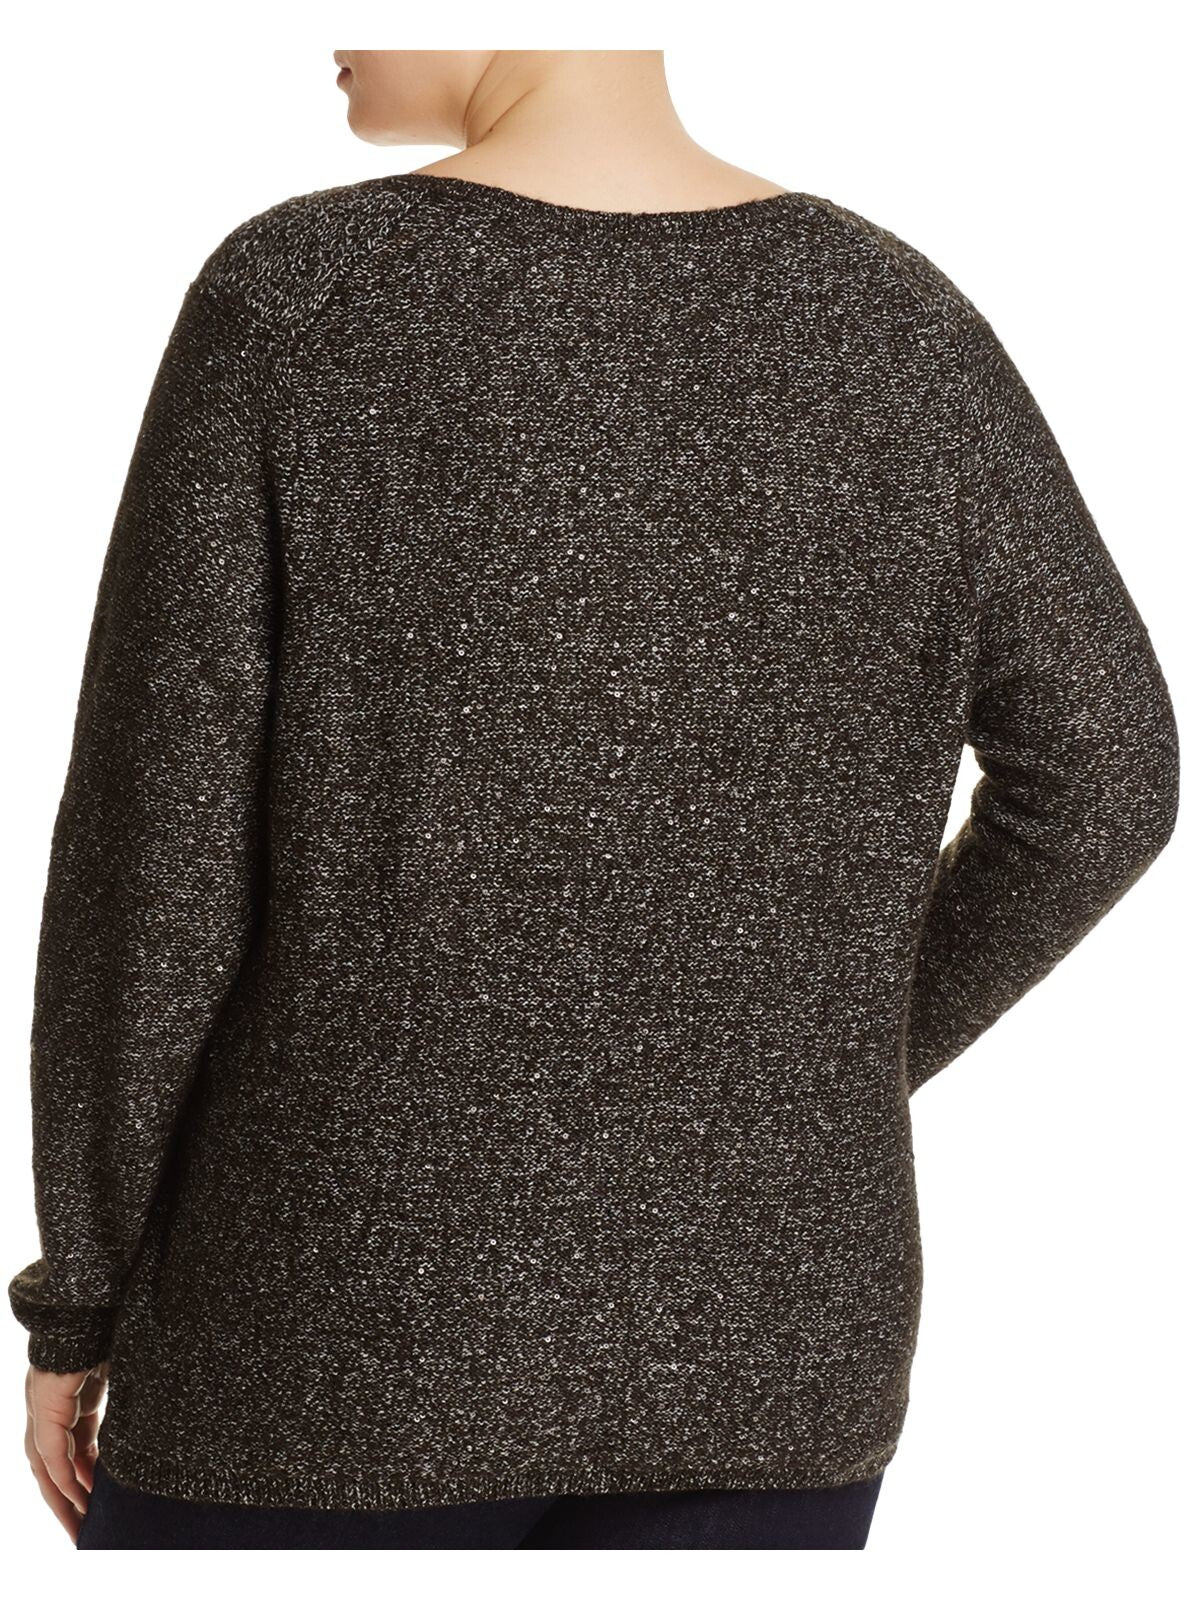 NYDJ Womens Black Sequined Long Sleeve Scoop Neck Sweater Plus 1X